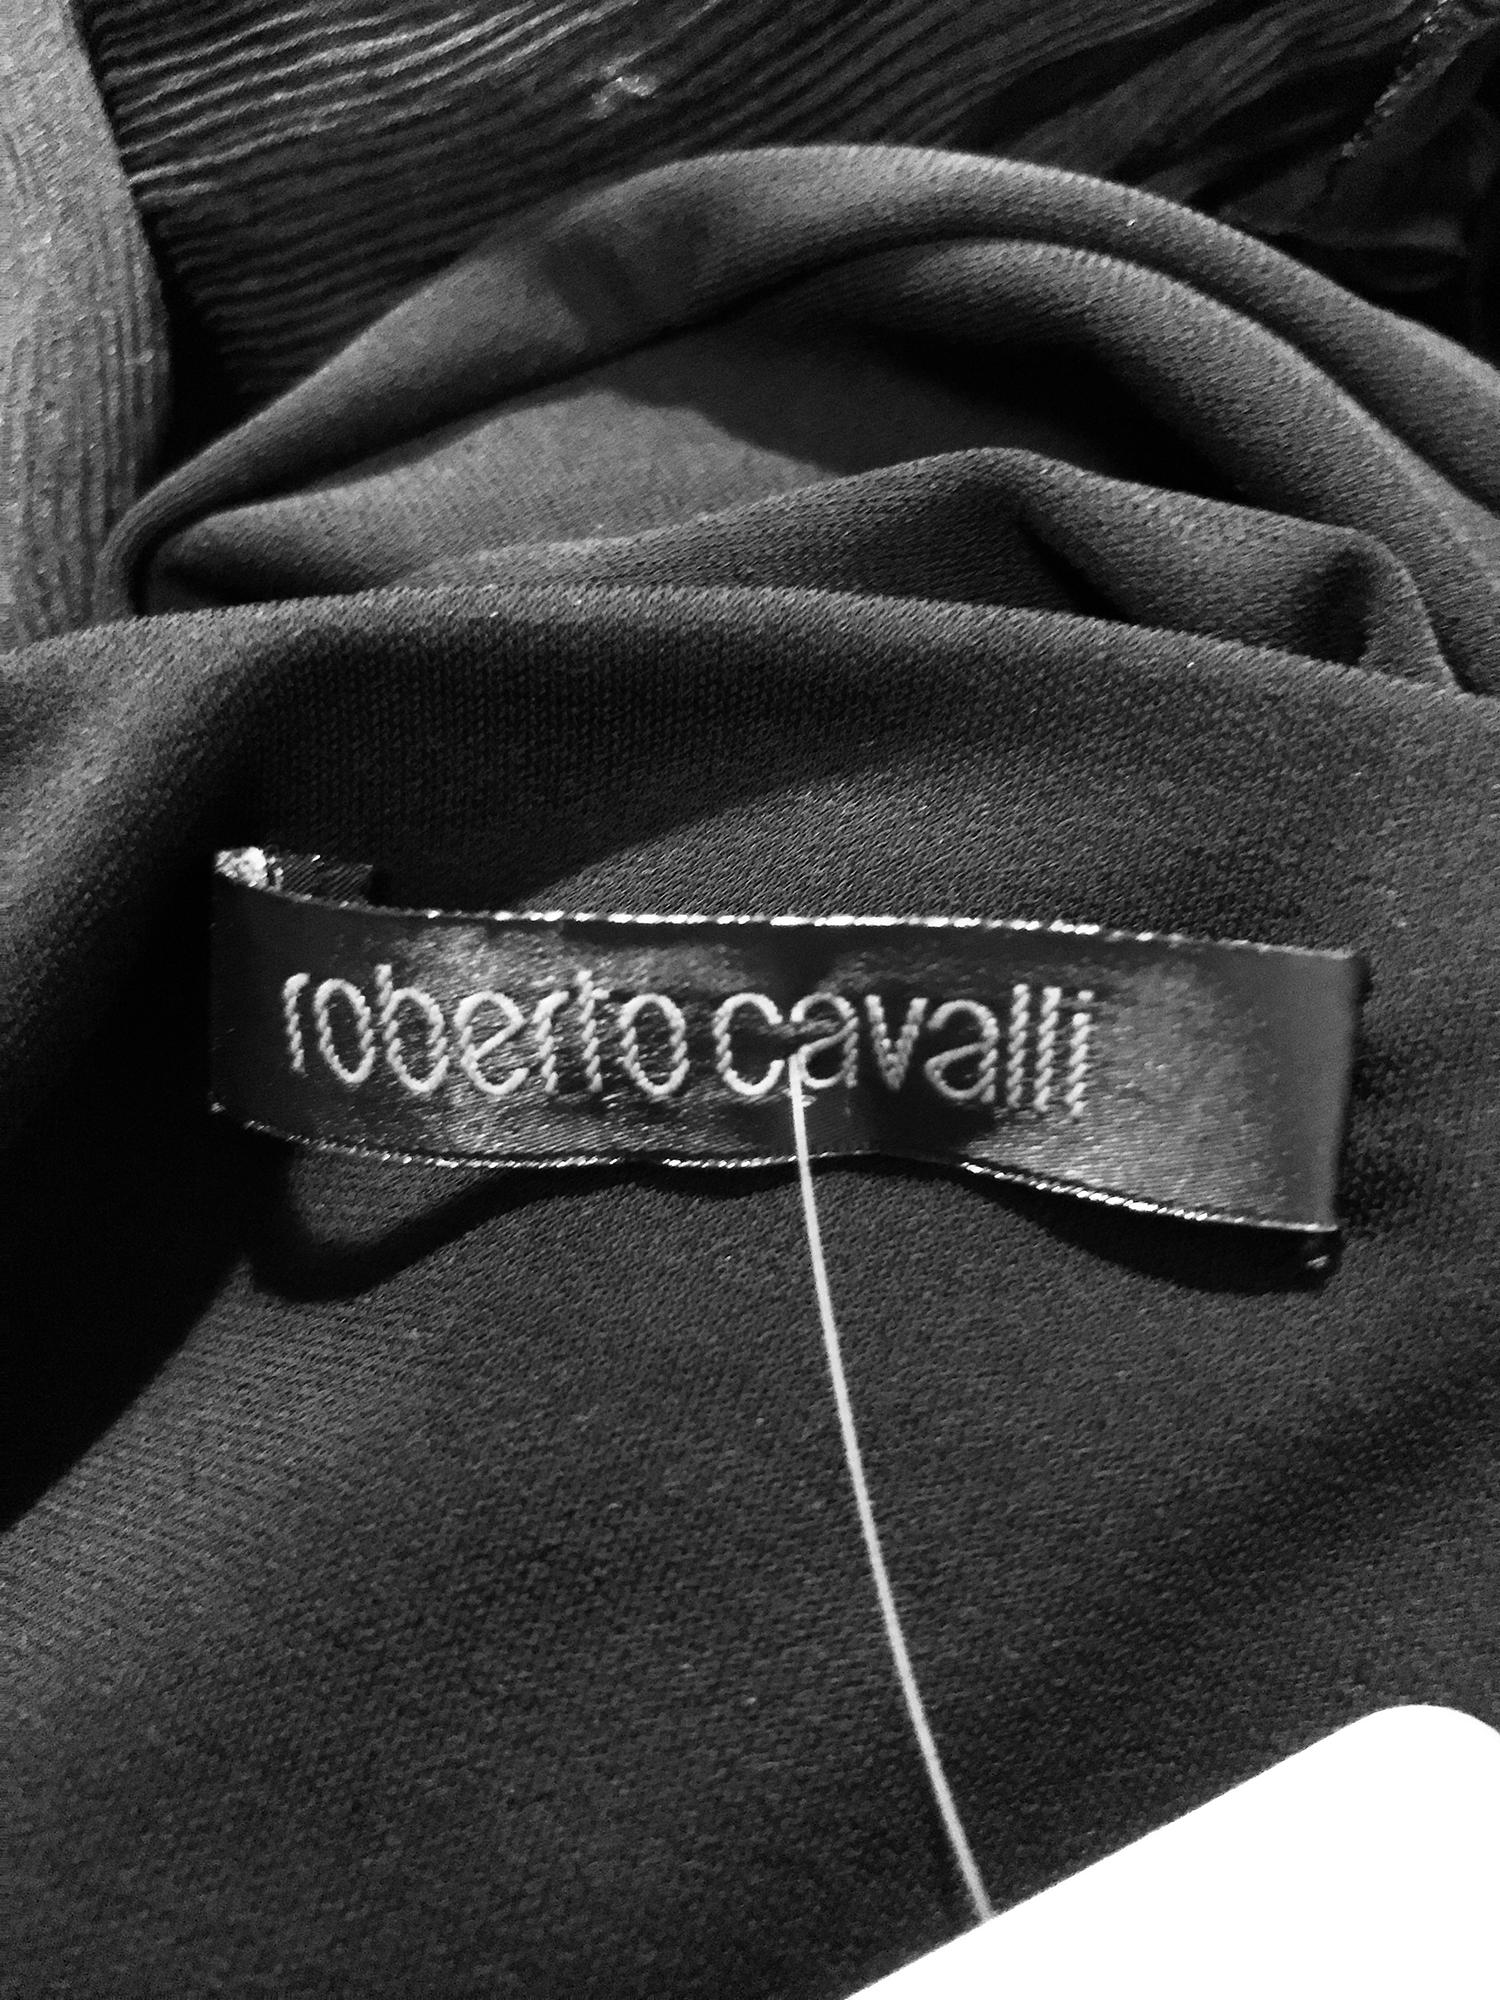 Roberto Cavalli Black Jersey Dress with Black Chiffon Sleeves For Sale ...